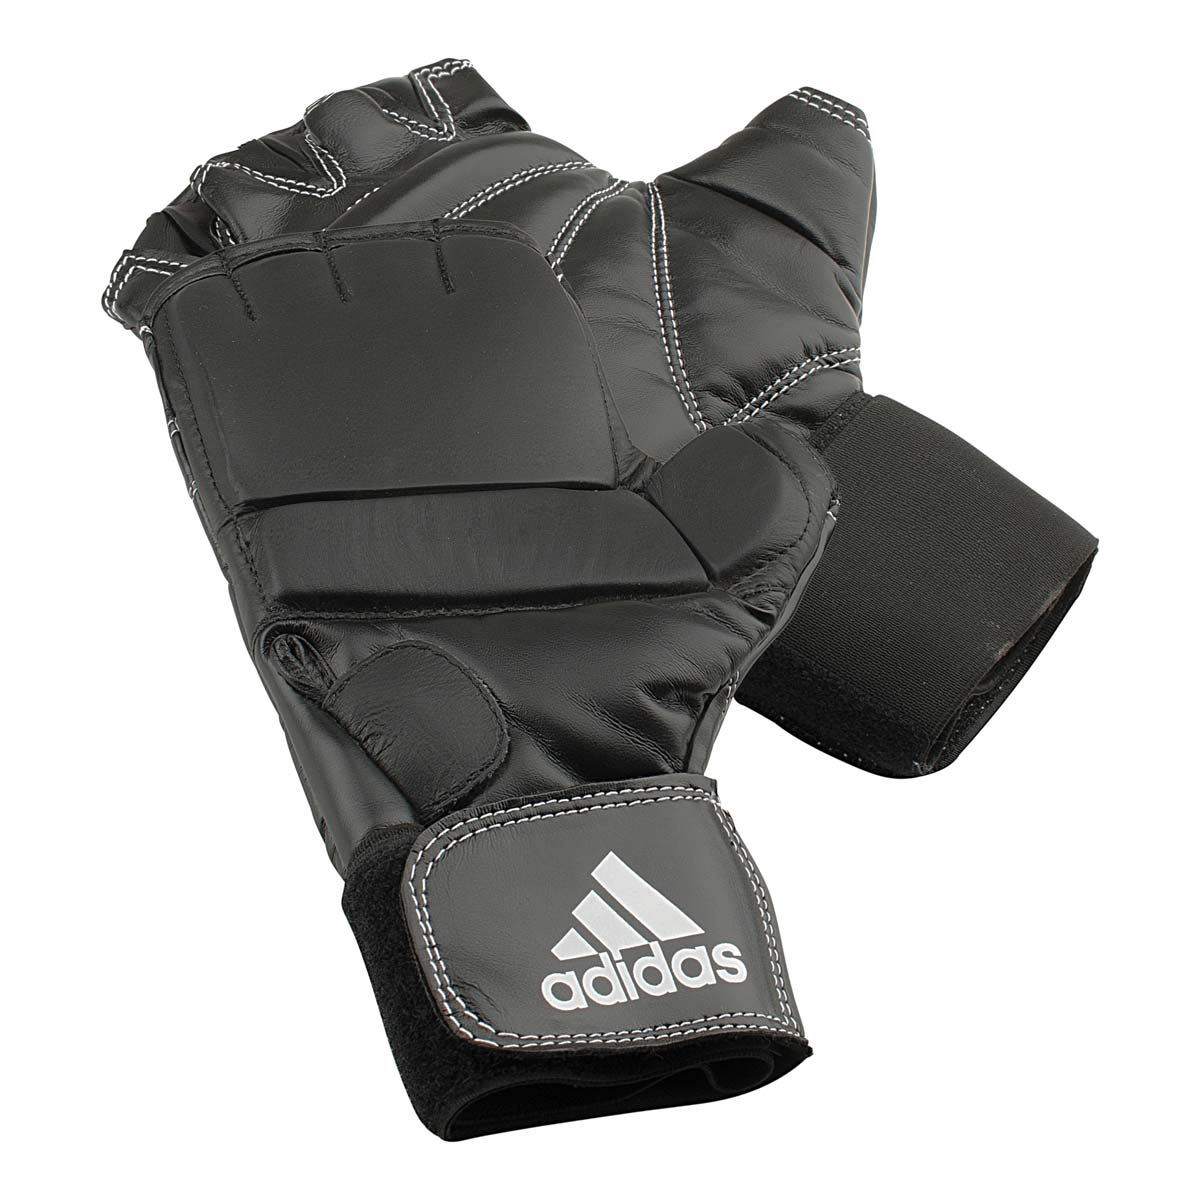 Adidas SPEED Gel leather-AAG_000055 Glove Bag